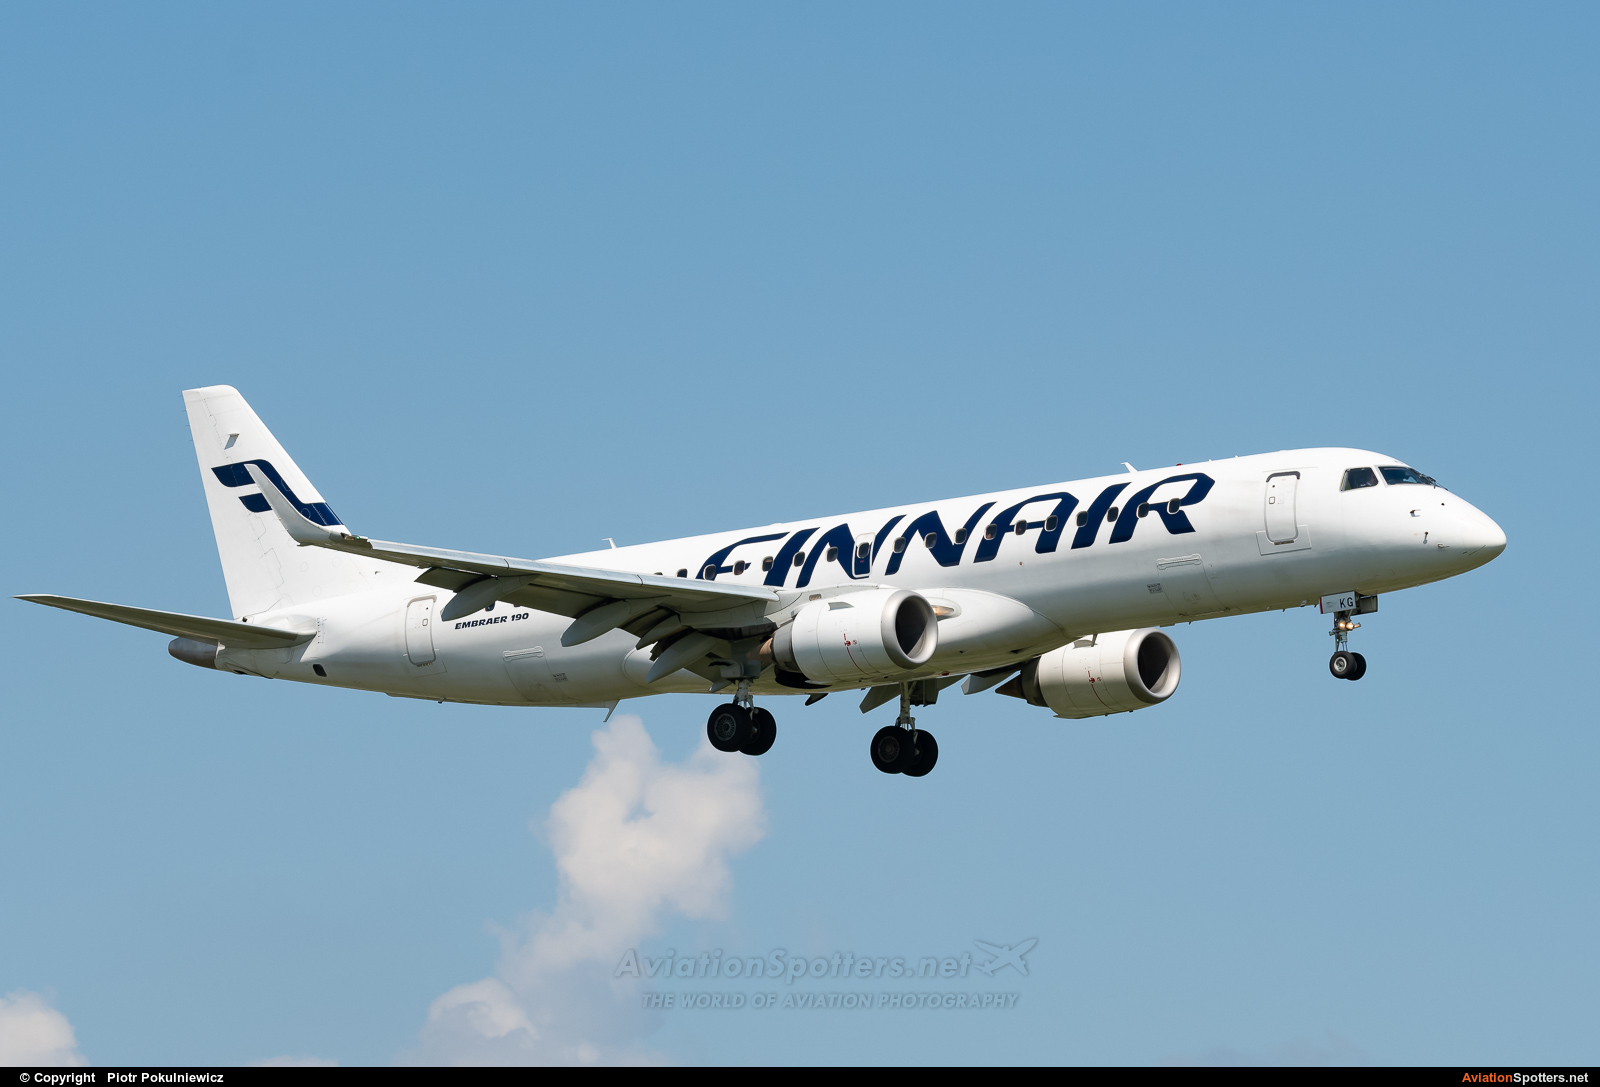 Finnair  -  190  (OH-LKG) By Piotr Pokulniewicz (Piciu)